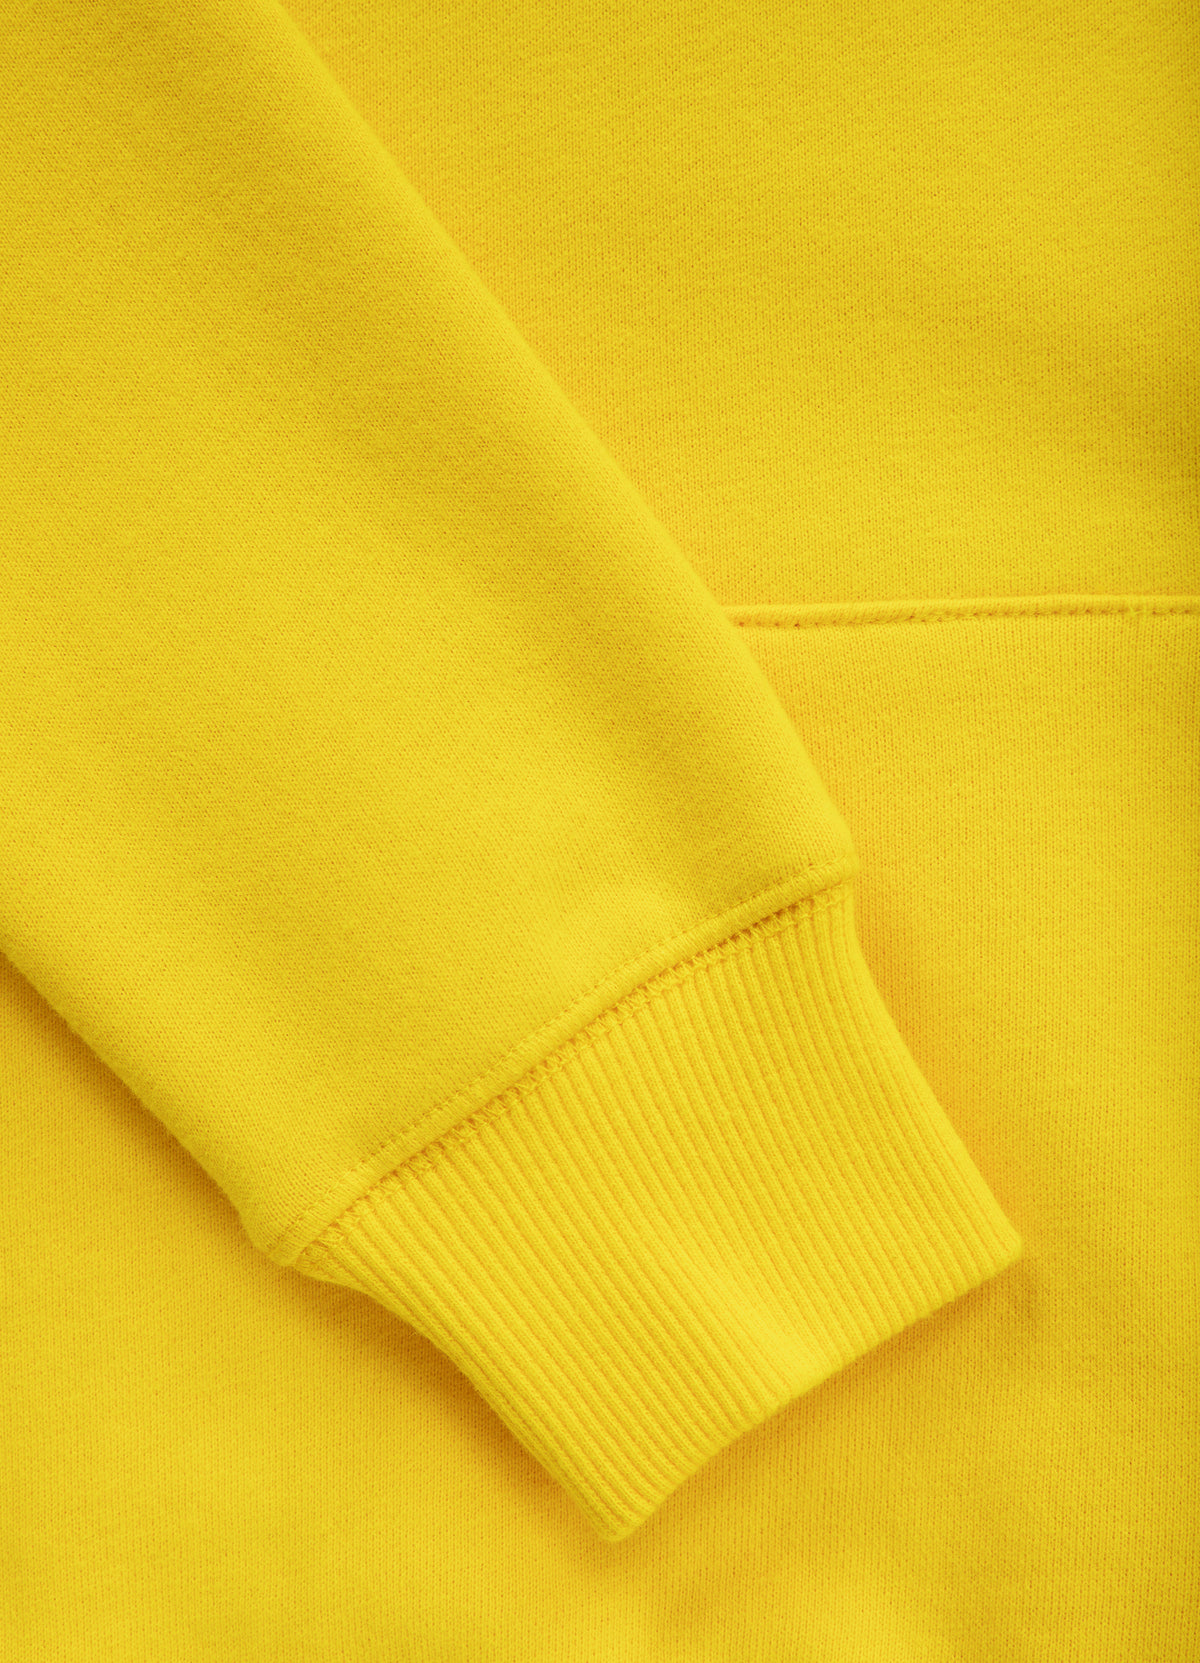 CLASSIC BOXING 2 Yellow hoodie.